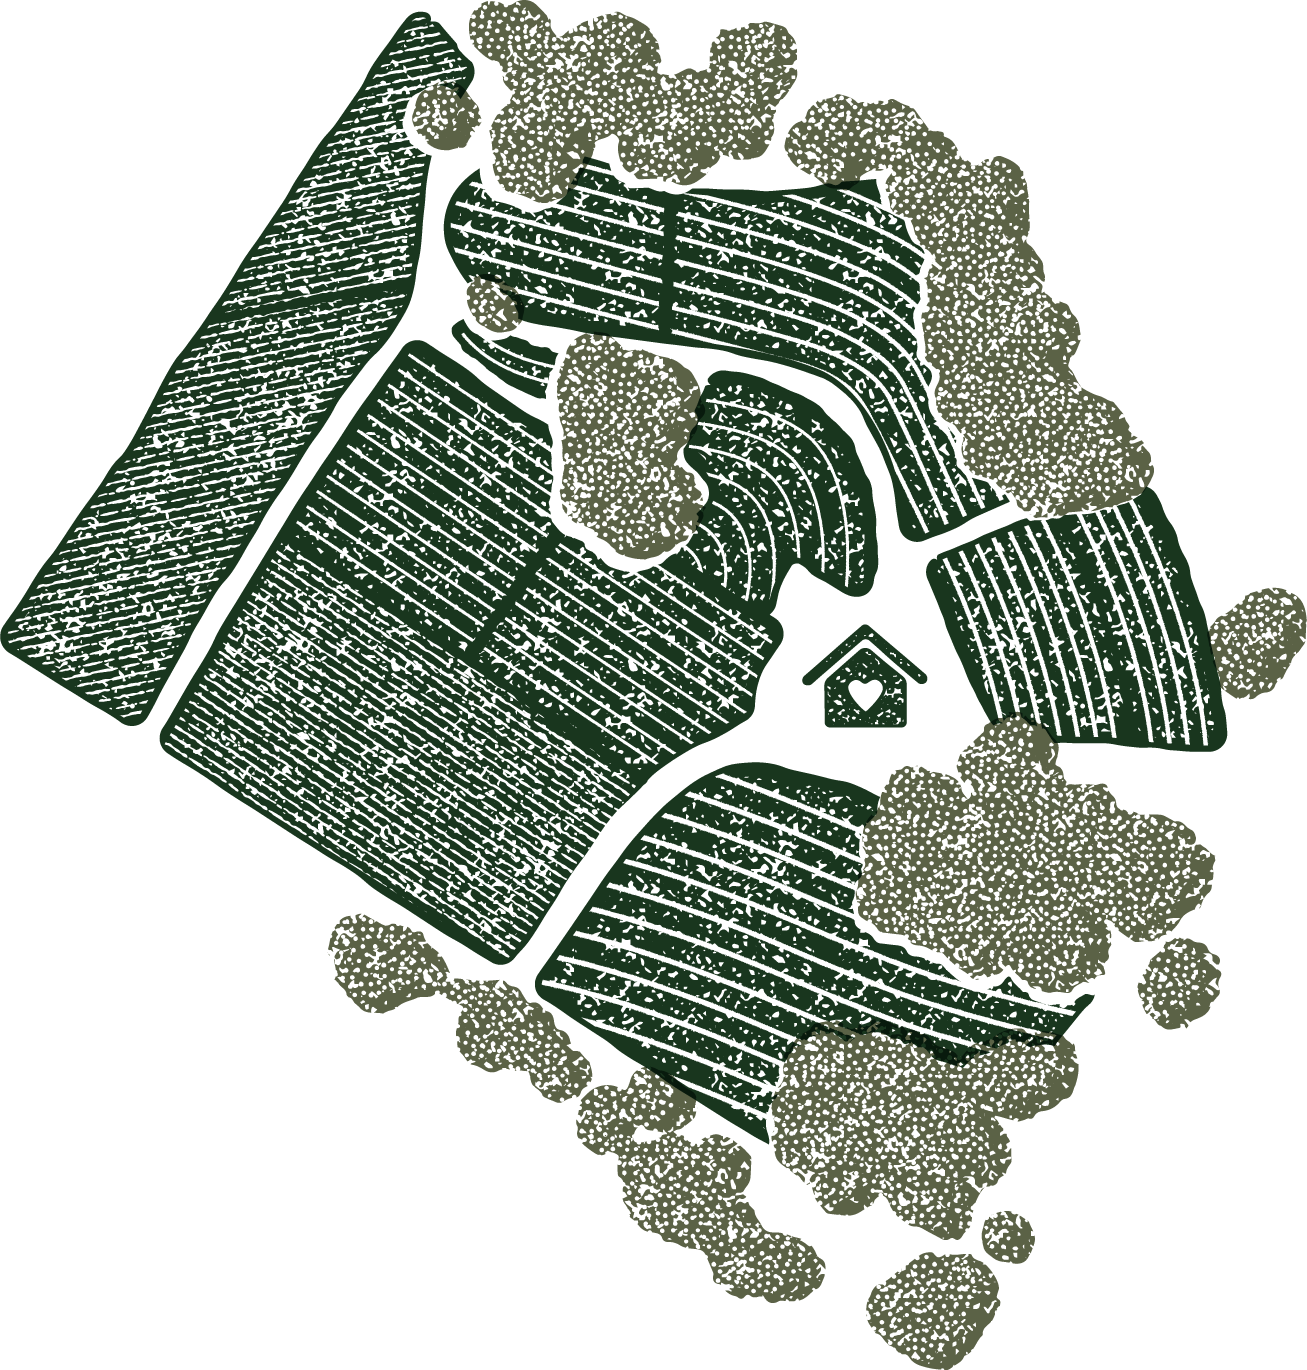 Carhartt Family Vineyard Map